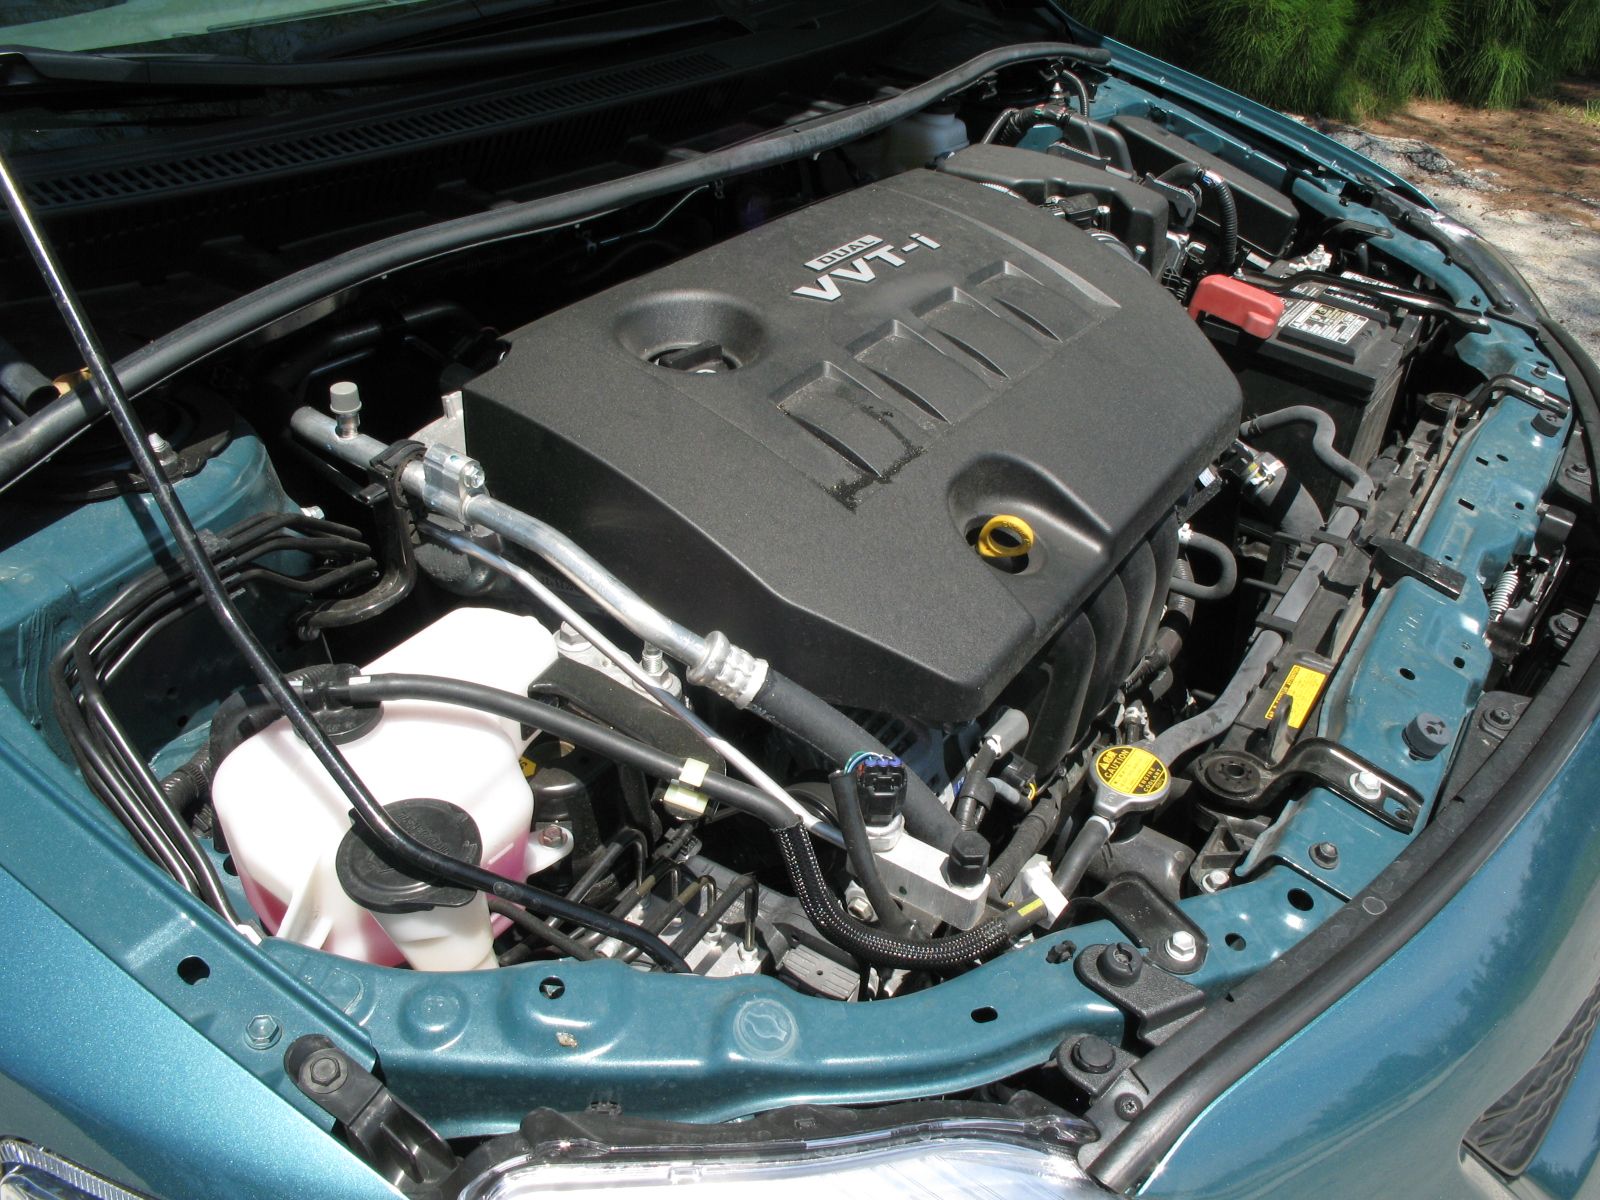 2008 Toyota Corolla